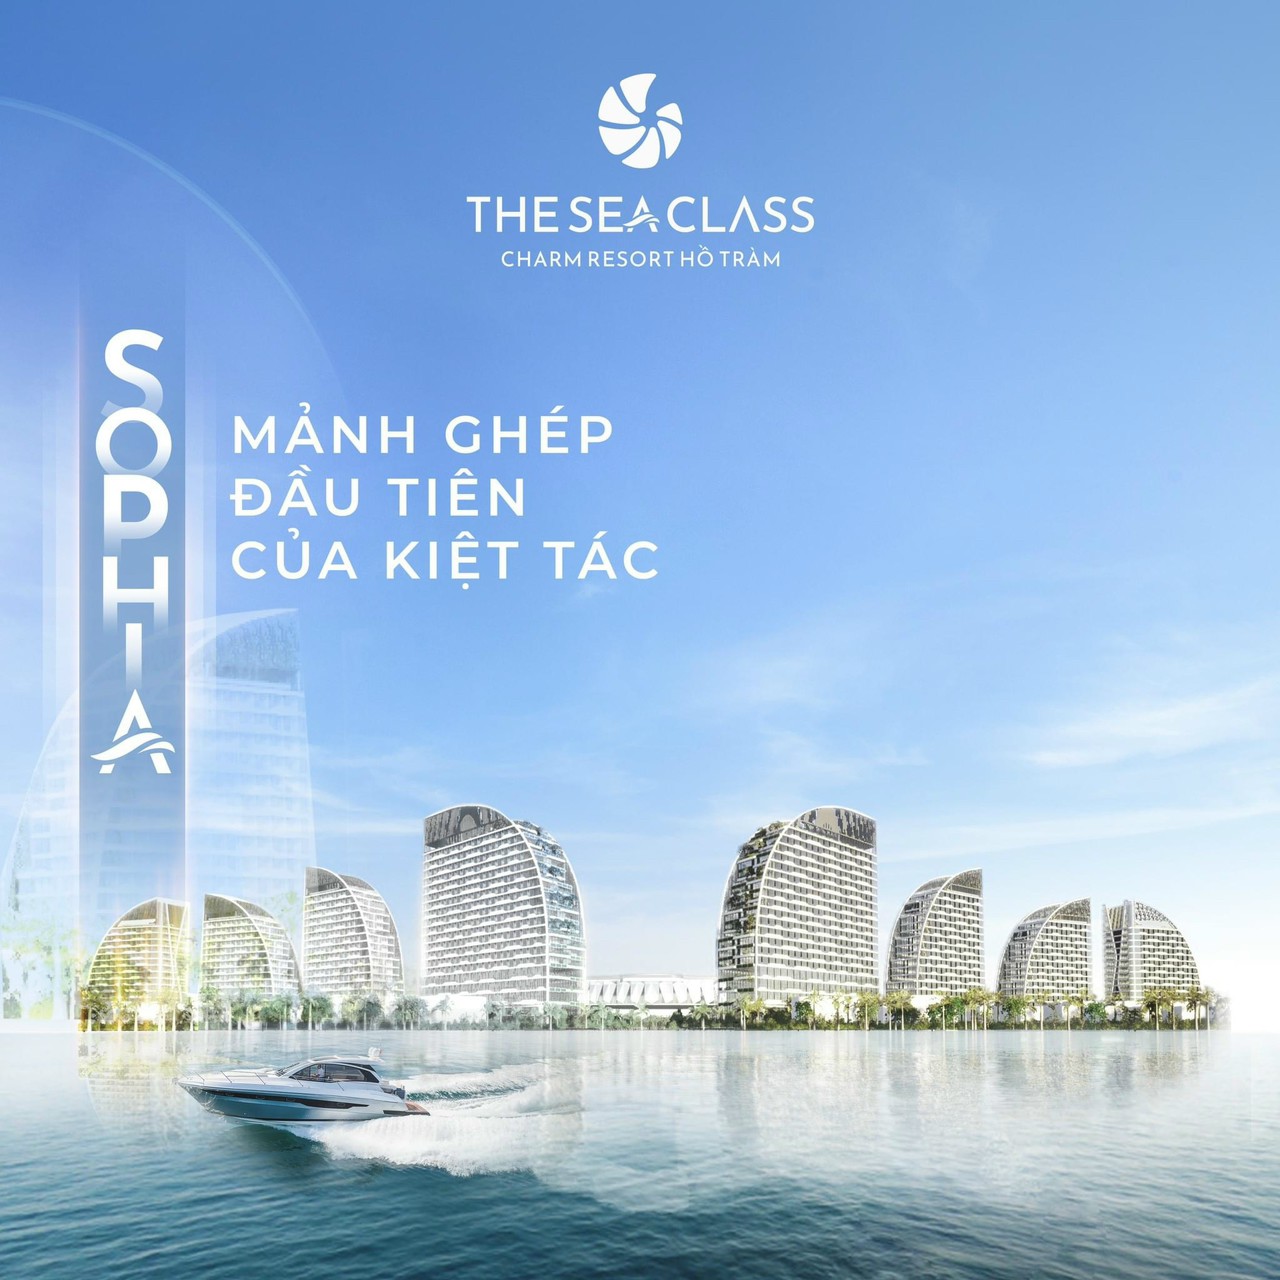 The Sea Class